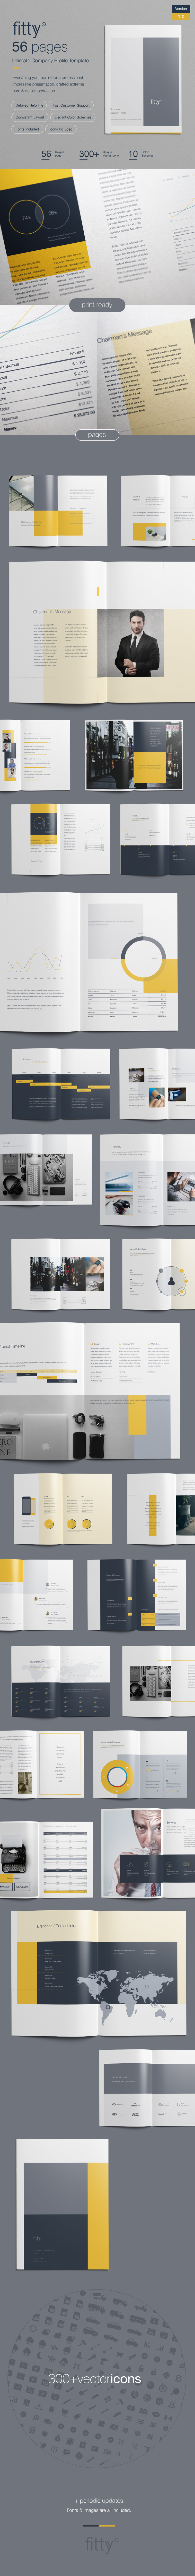 56页公司简介企业画册设计模板 Ultimate Company Profile Template插图